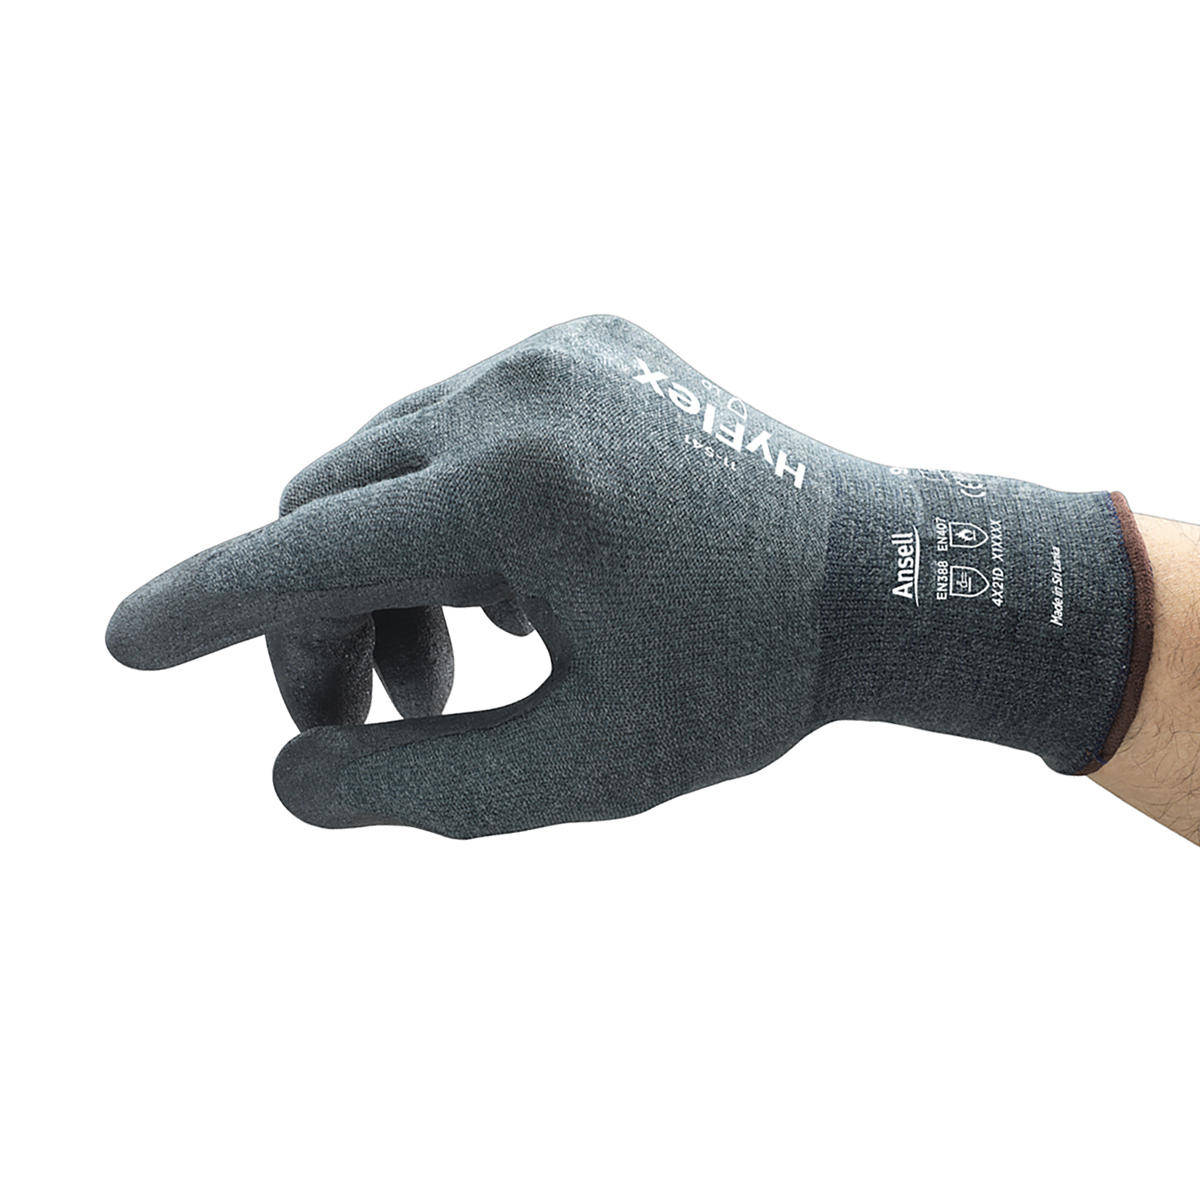 SEALED PKG XS Pair SZ 6 Ansell Hyflex Cut Resistant Nitrile Gloves 11-841 12 